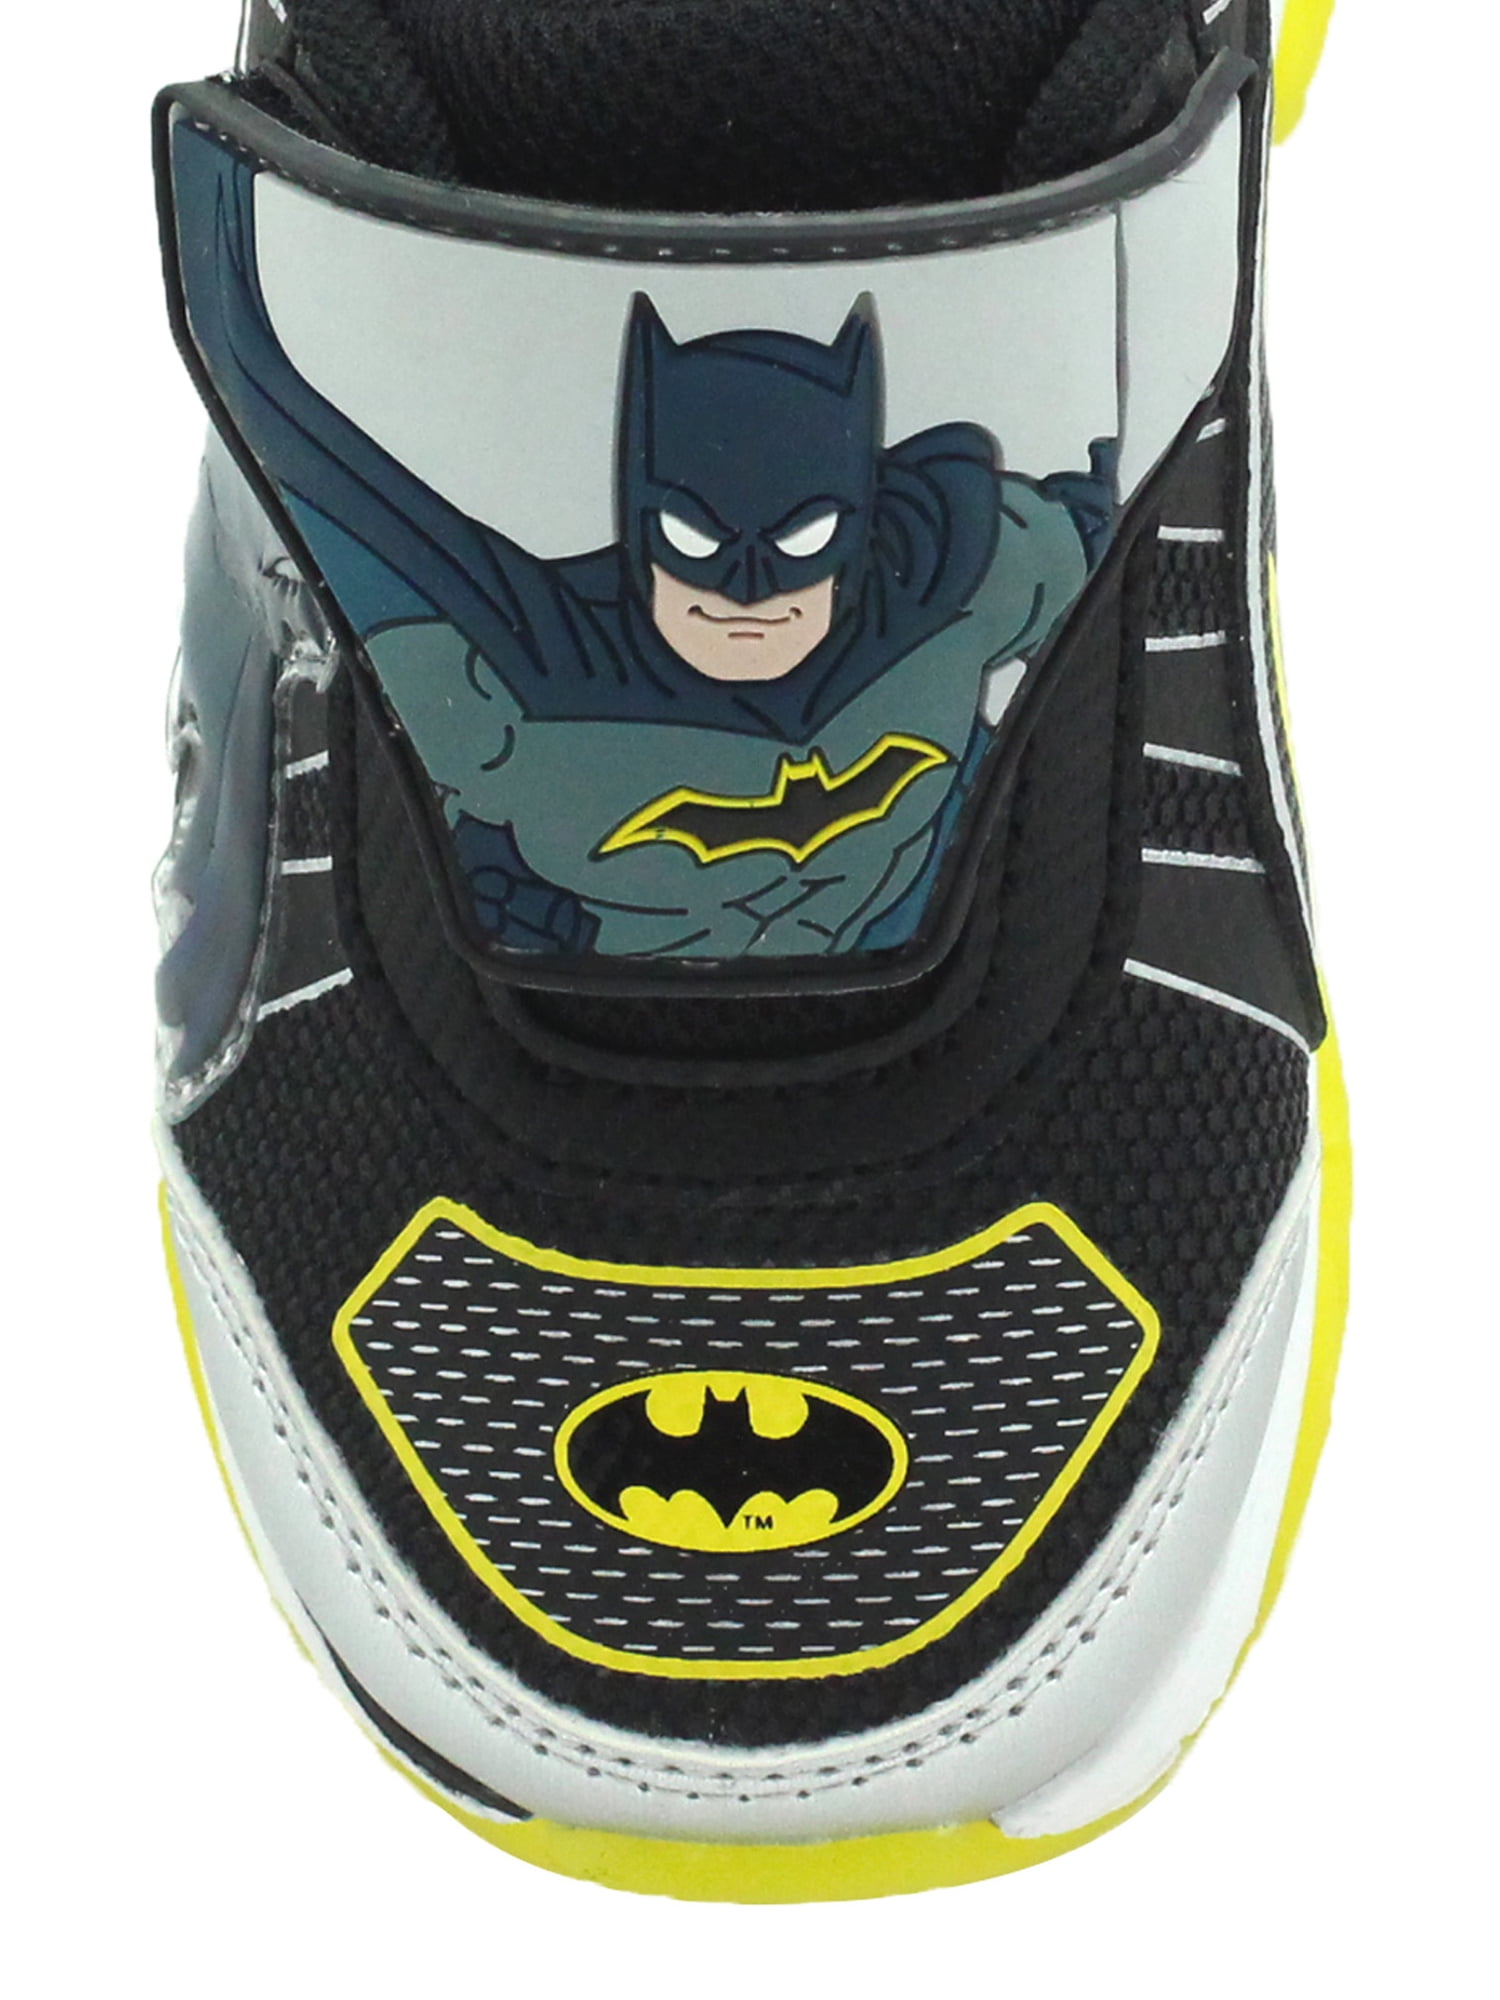 7,8,9,10,11,12 Sz DC Comics Batman Toddler Light Up Sneaker Athletic Shoe 